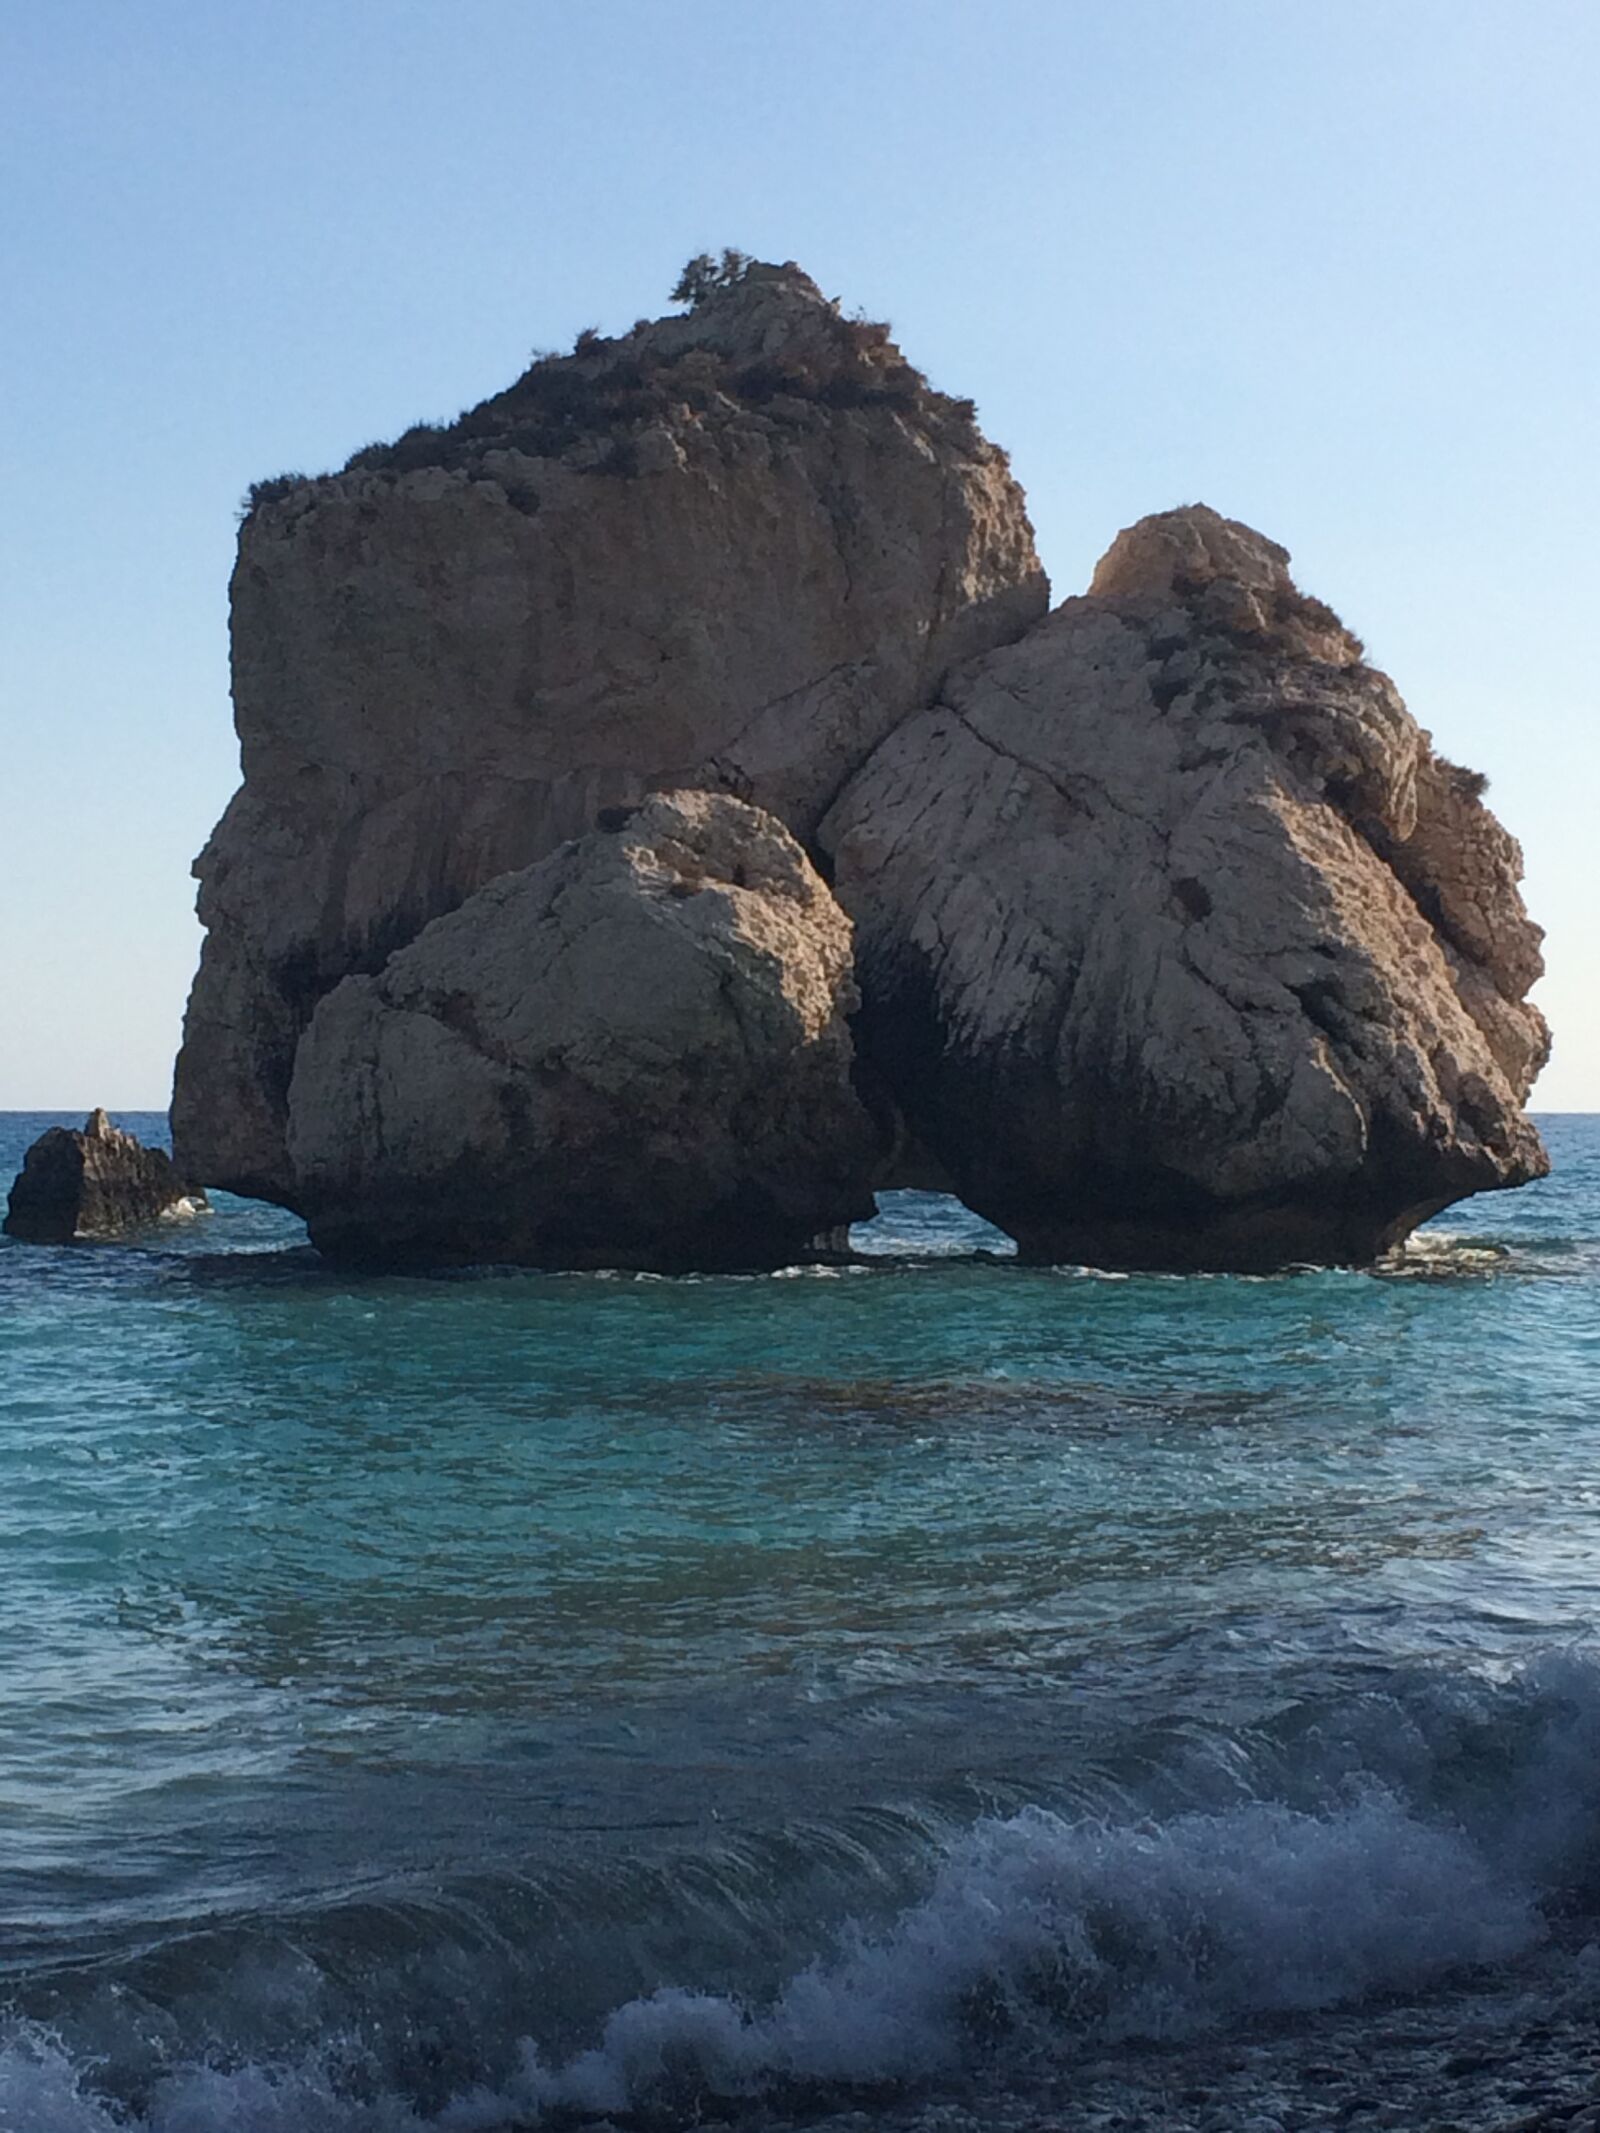 iPhone 5s back camera 4.15mm f/2.2 sample photo. Aphrodite rock, sea, cyprus photography